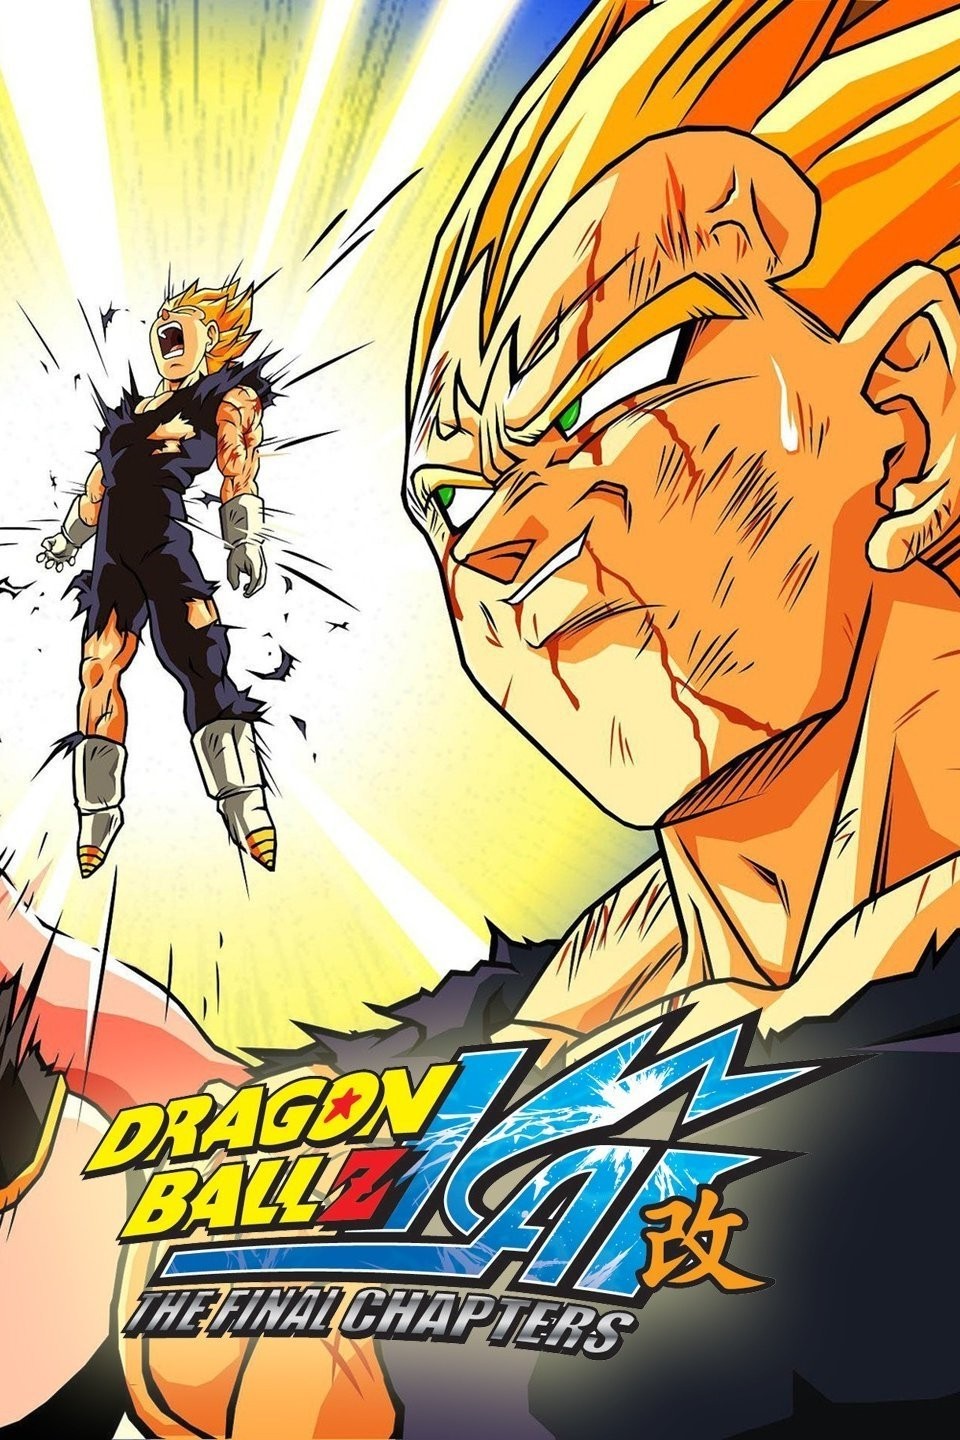 Dragon Ball Z Kai - Season Two